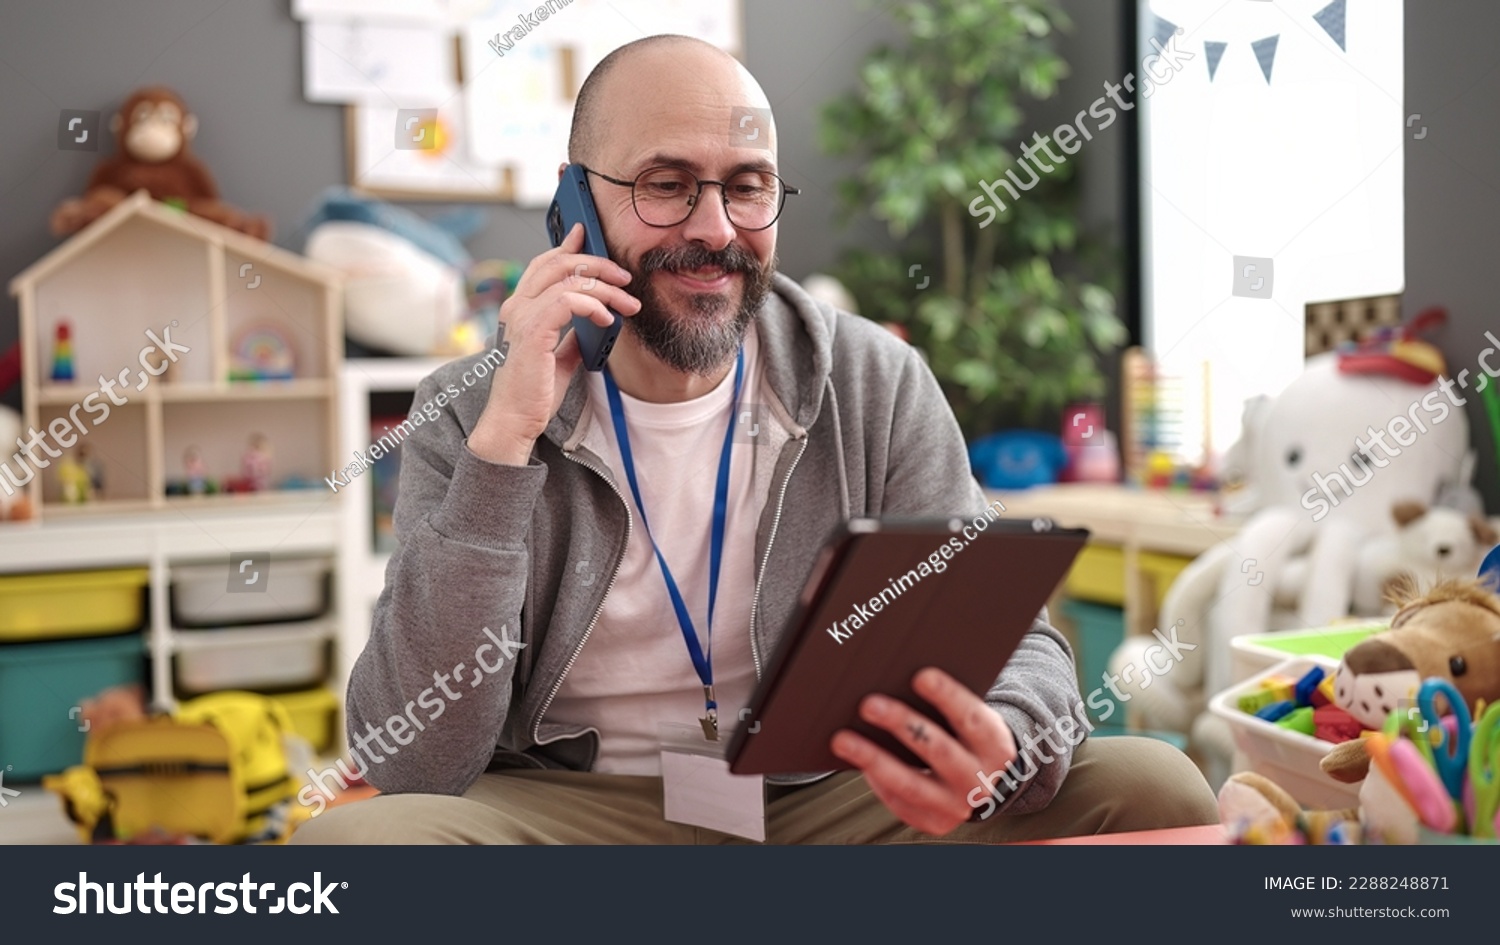 Young bald man preschool teacher using touchpad speaking on the phone at kindergarten #2288248871